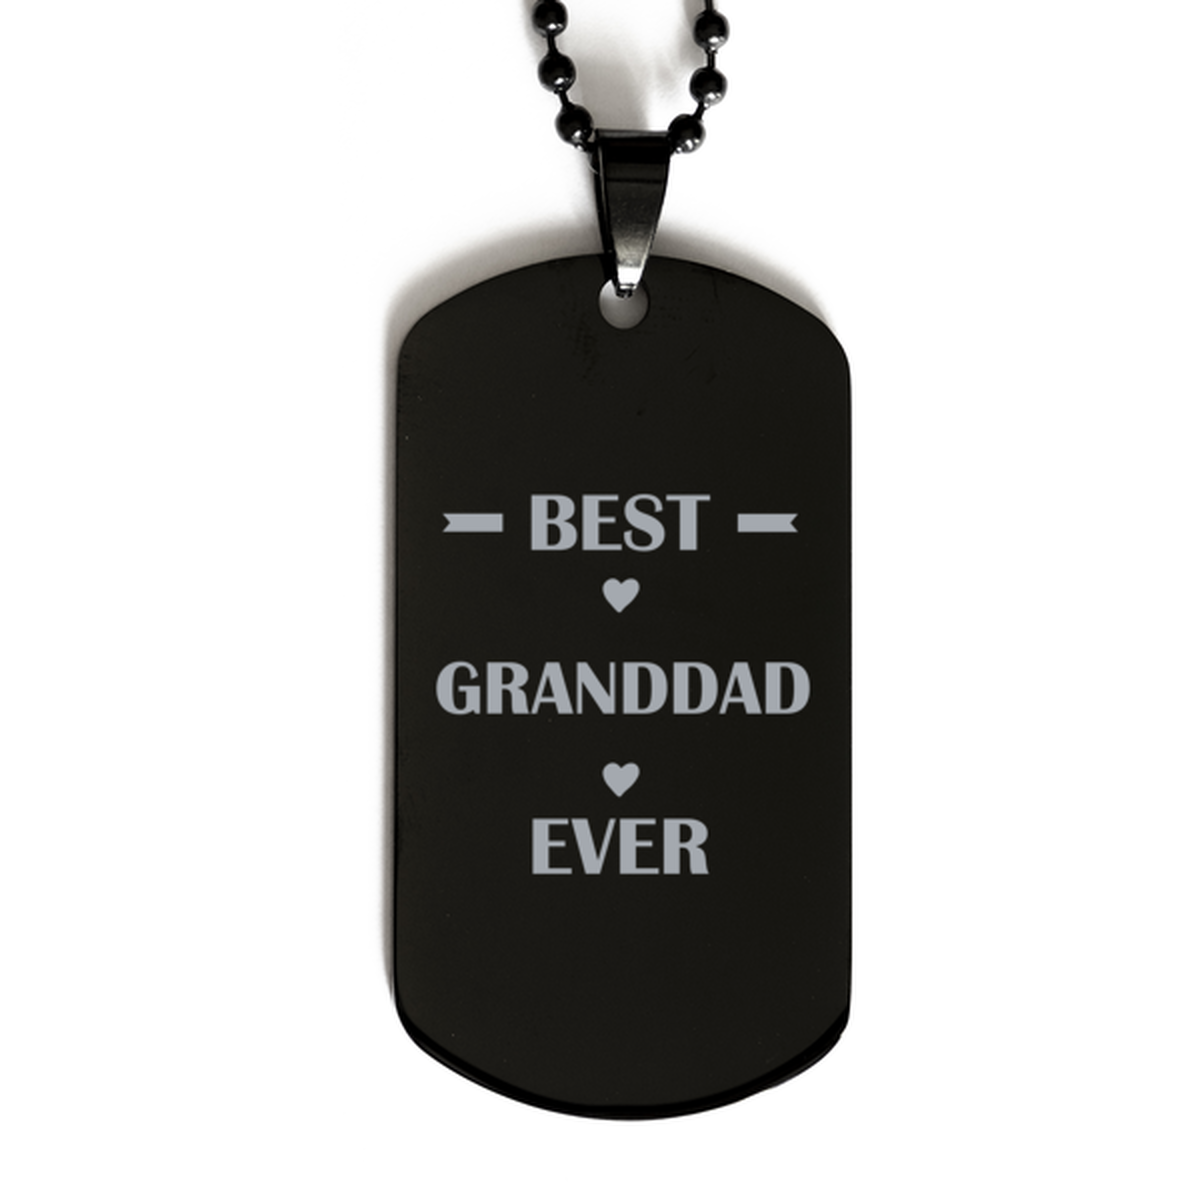 Best Granddad Ever Granddad Gifts, Funny Black Dog Tag For Granddad, Birthday Family Presents Engraved Necklace For Men